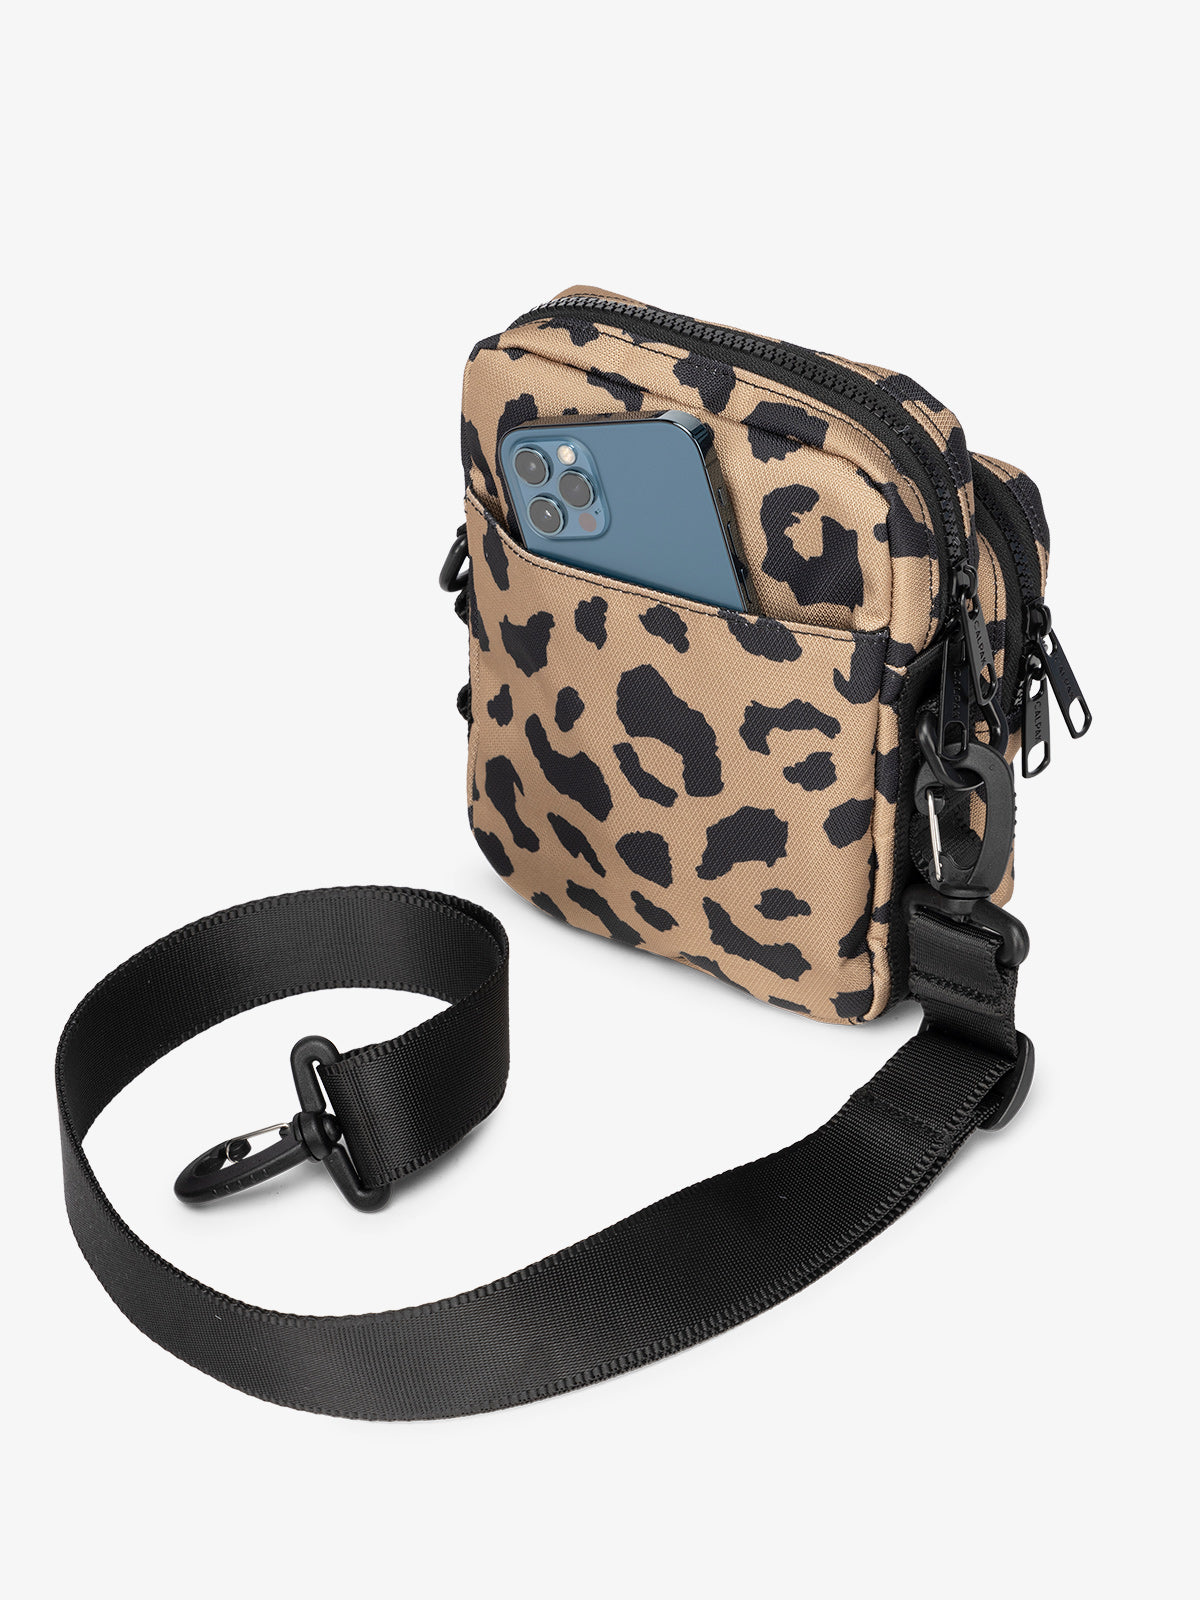 Back-view of cheetah CALPAK Stevyn Mini Crossbody Bag with back-slip pocket for cell phone or other belongings